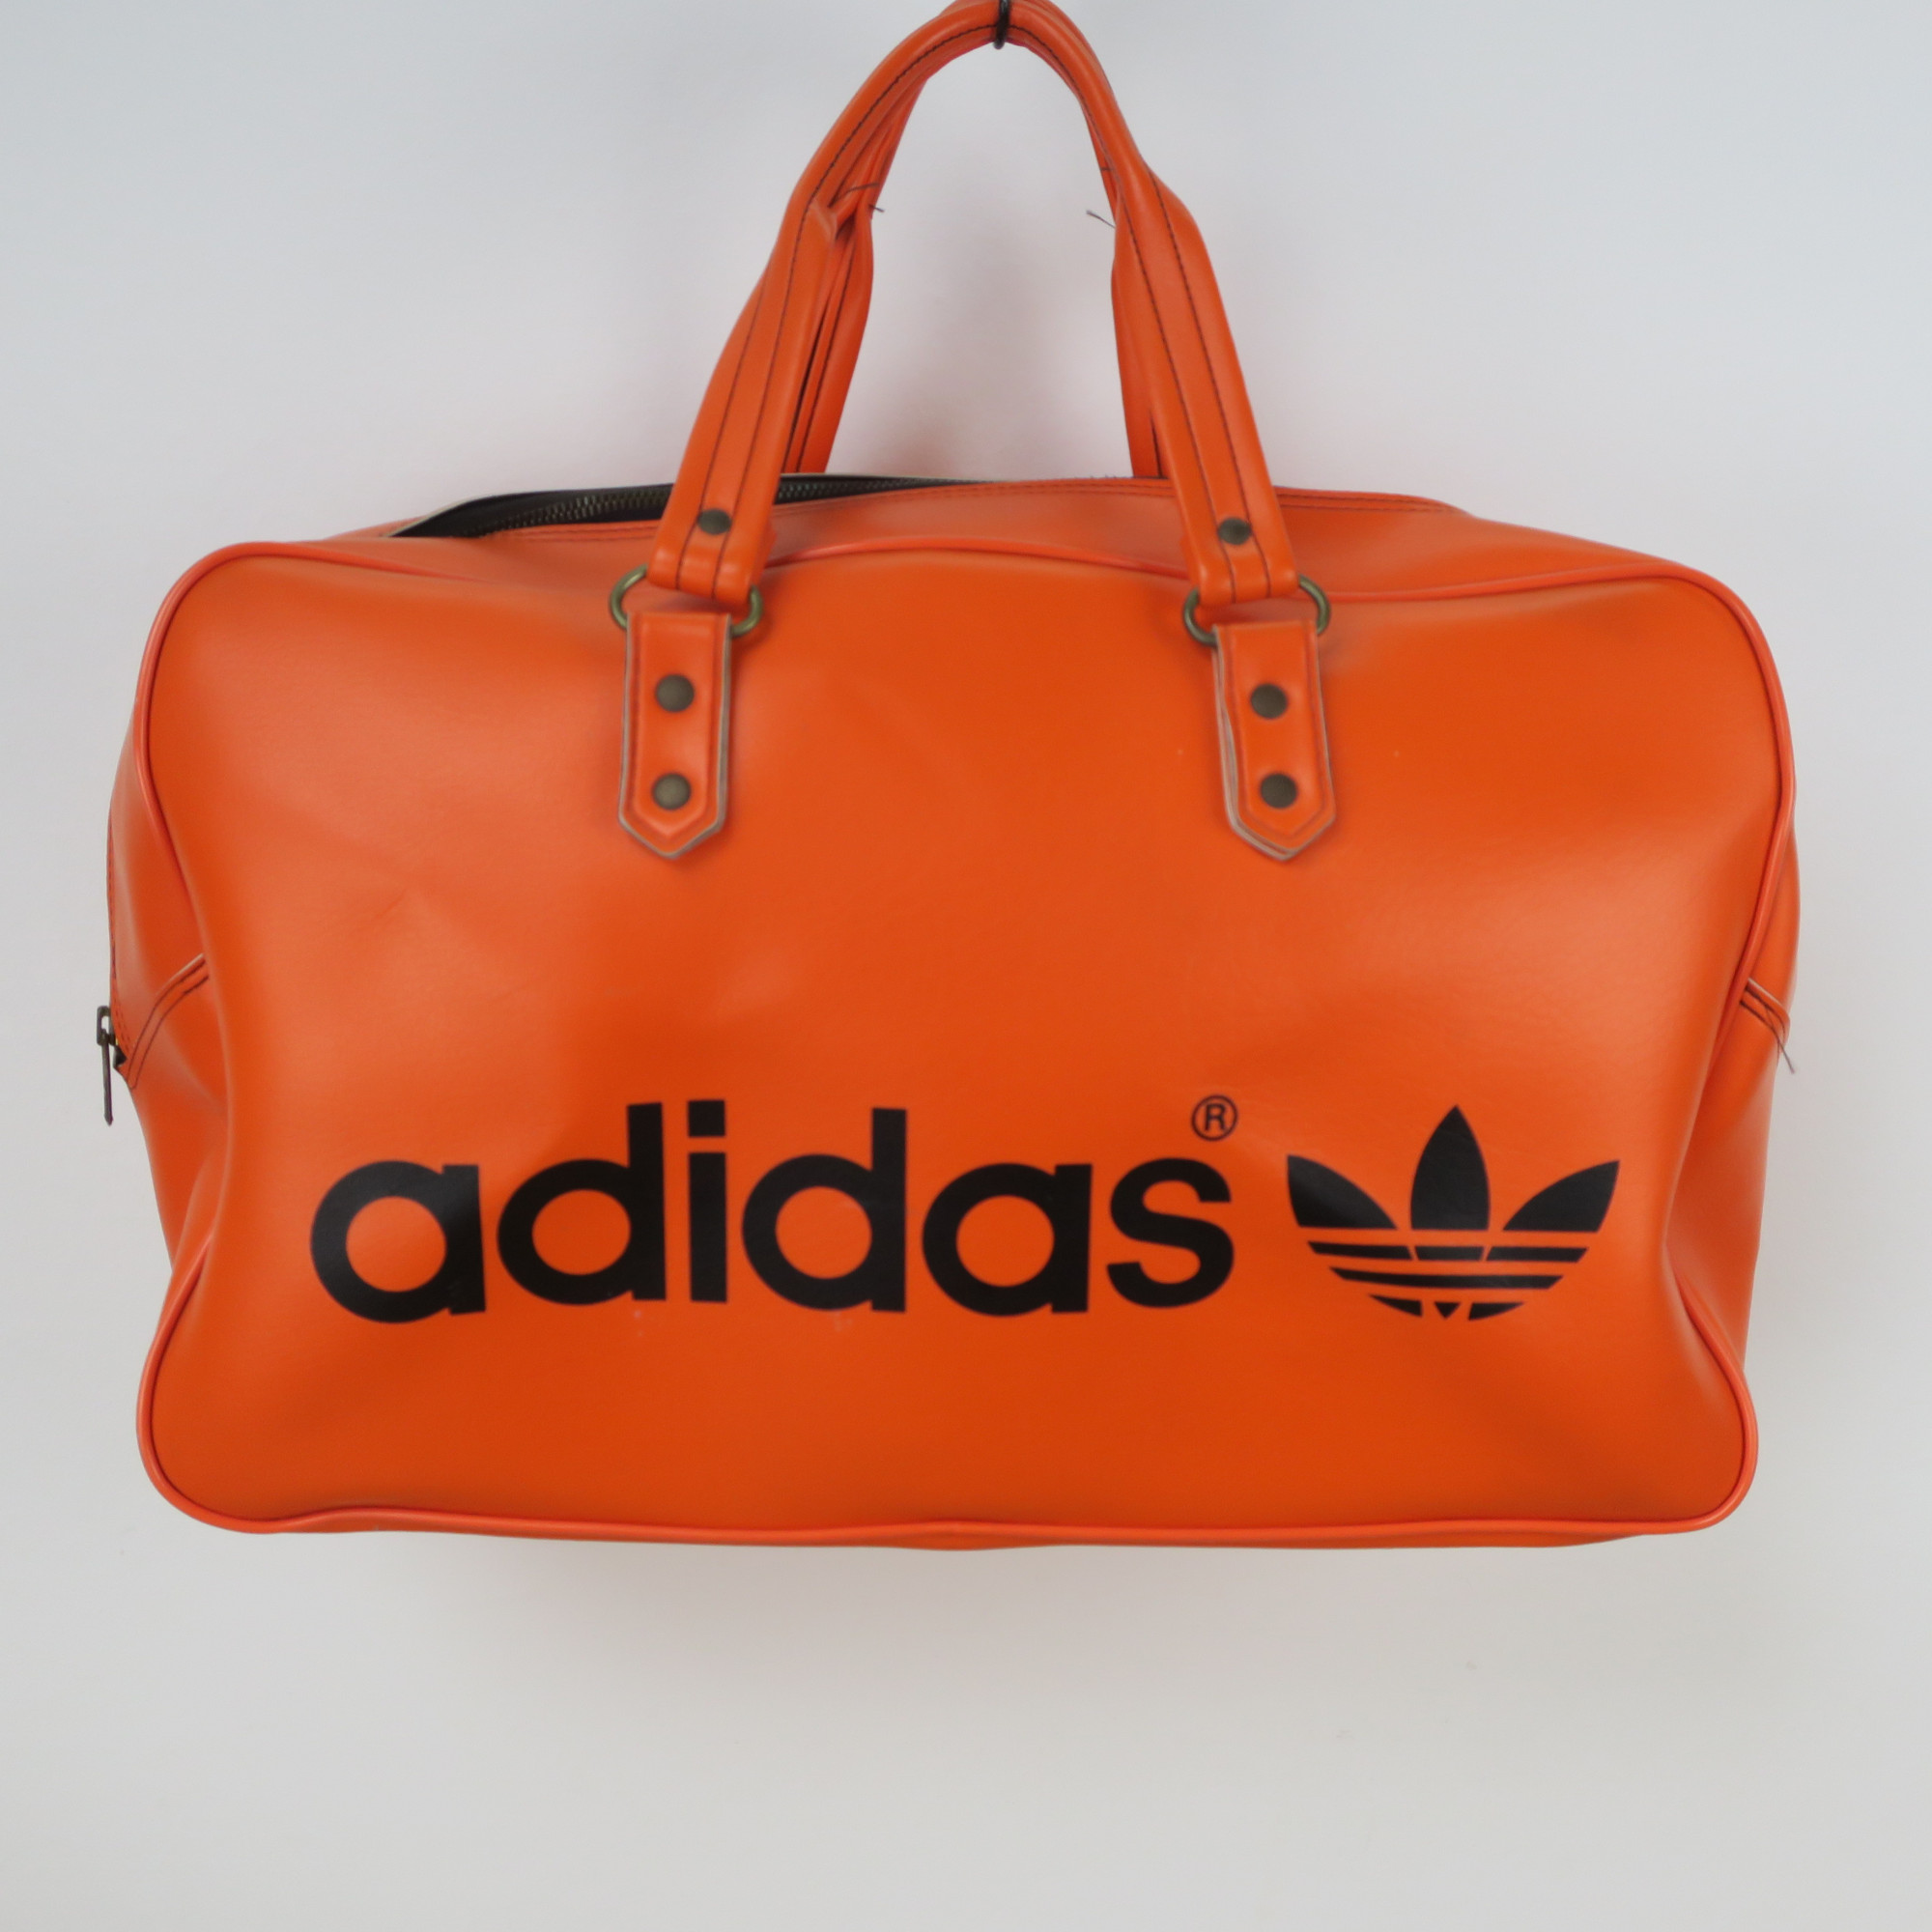 rol Regenachtig nood Vintage Adidas sports bag in orange imitation leather - Retroriek